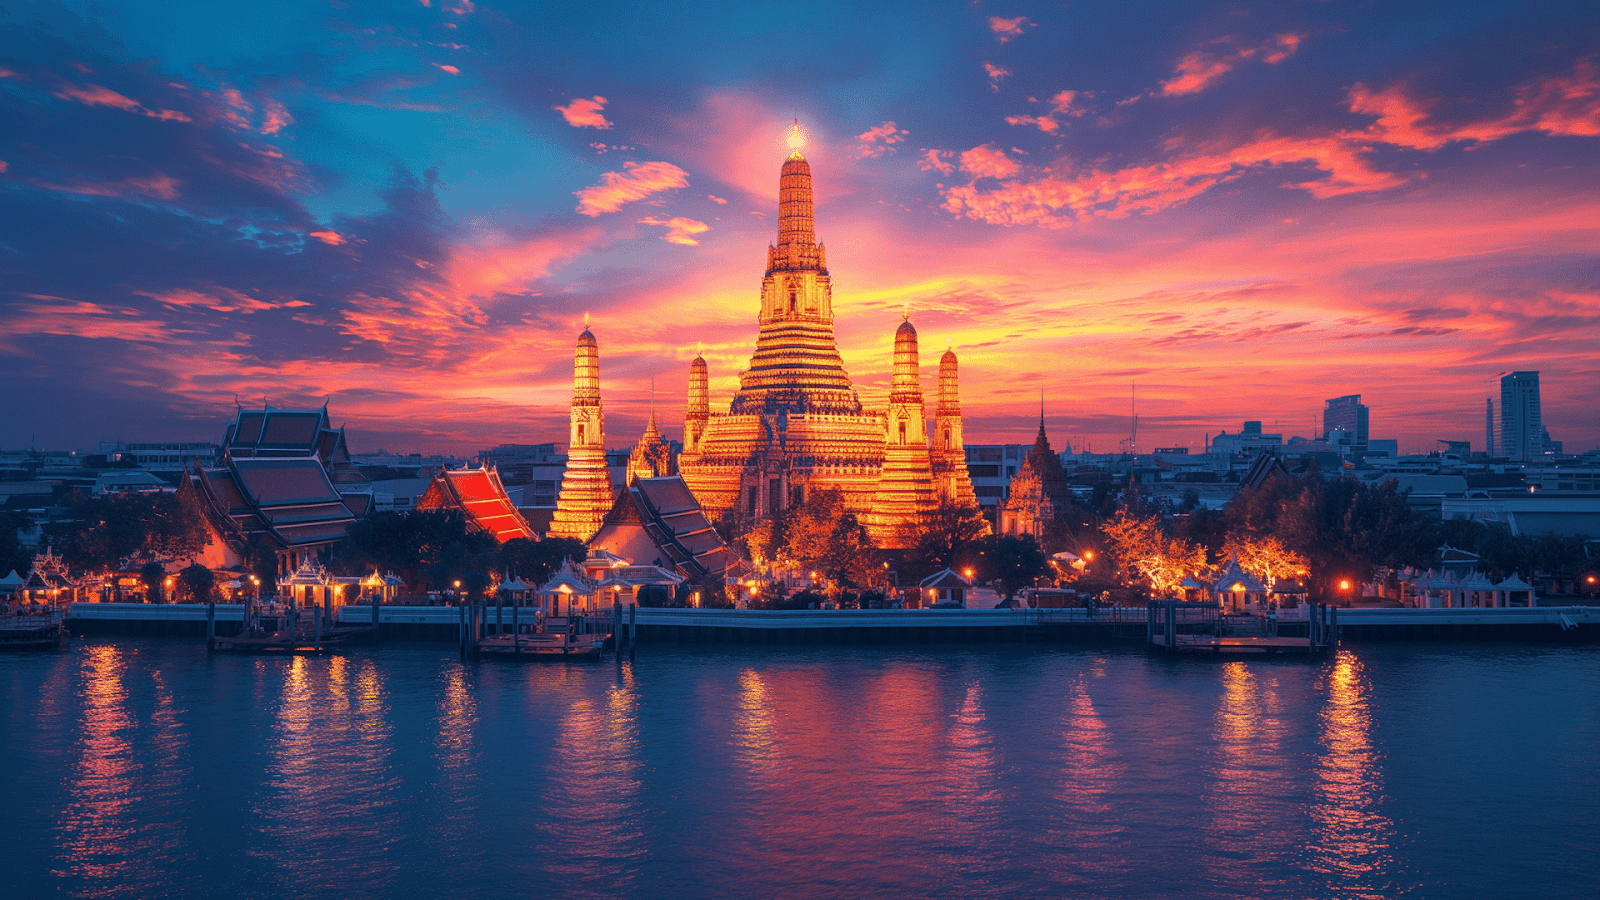 Sunset over Wat Arun, a jewel in Bangkok, Thailand's skyline